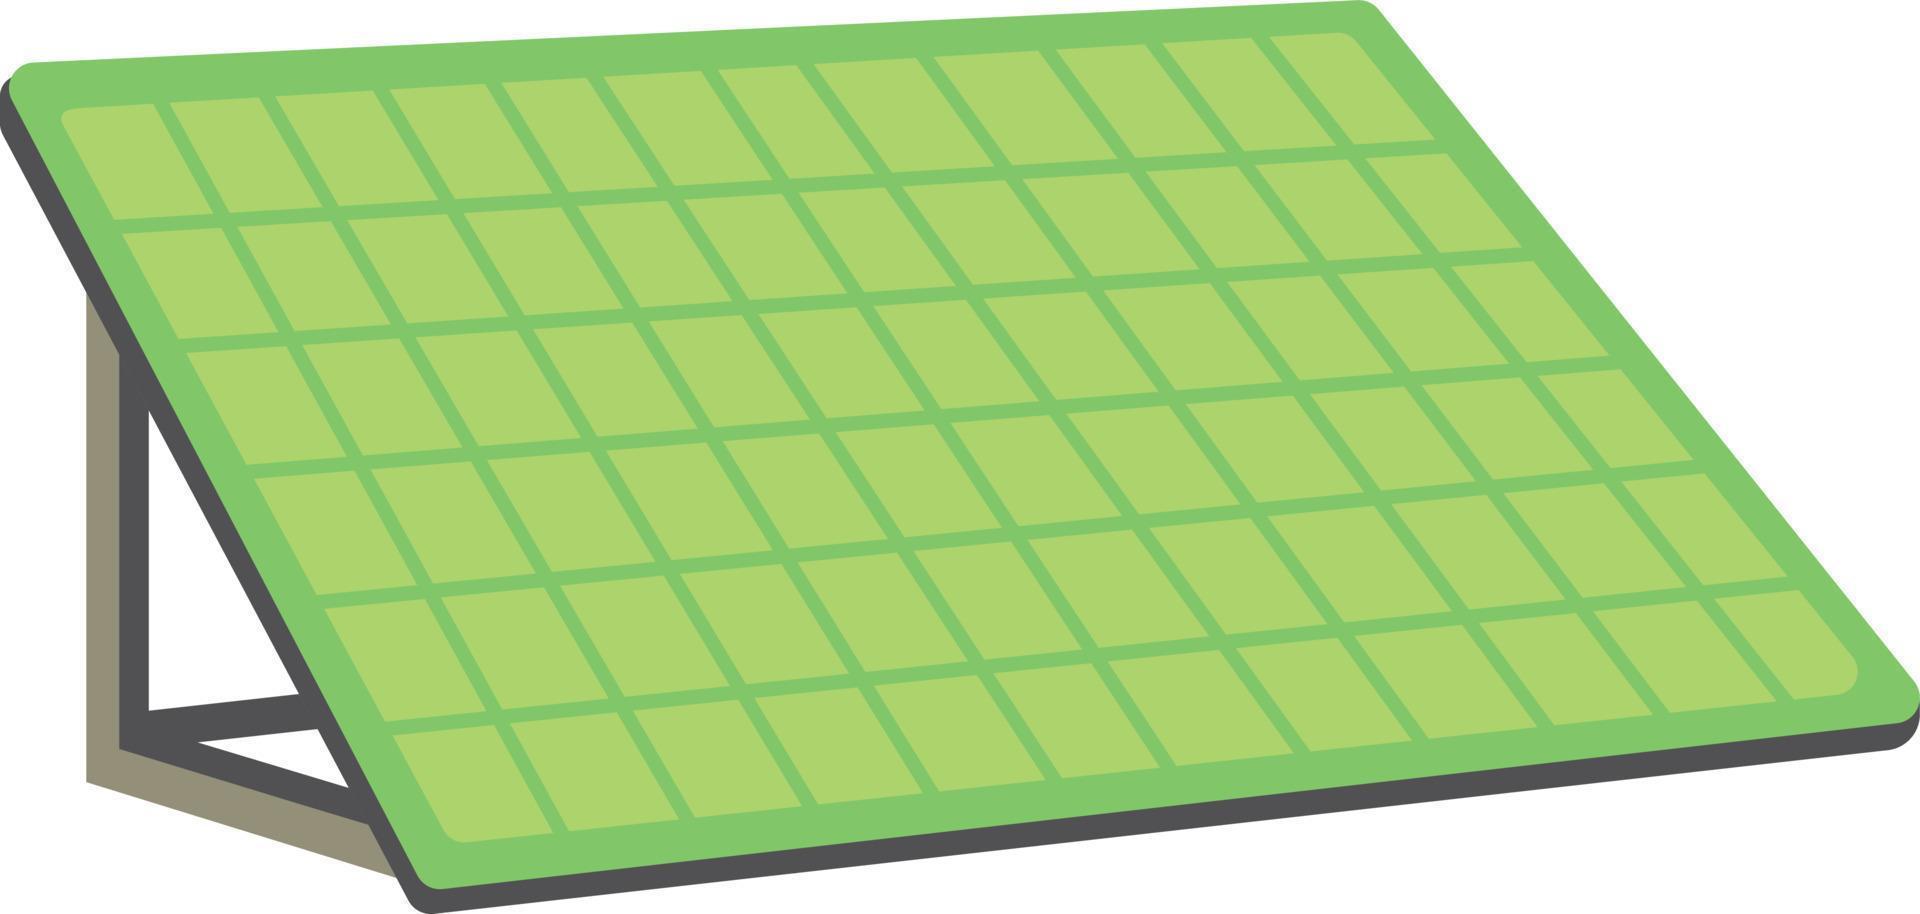 Solar panel roof illustration vector